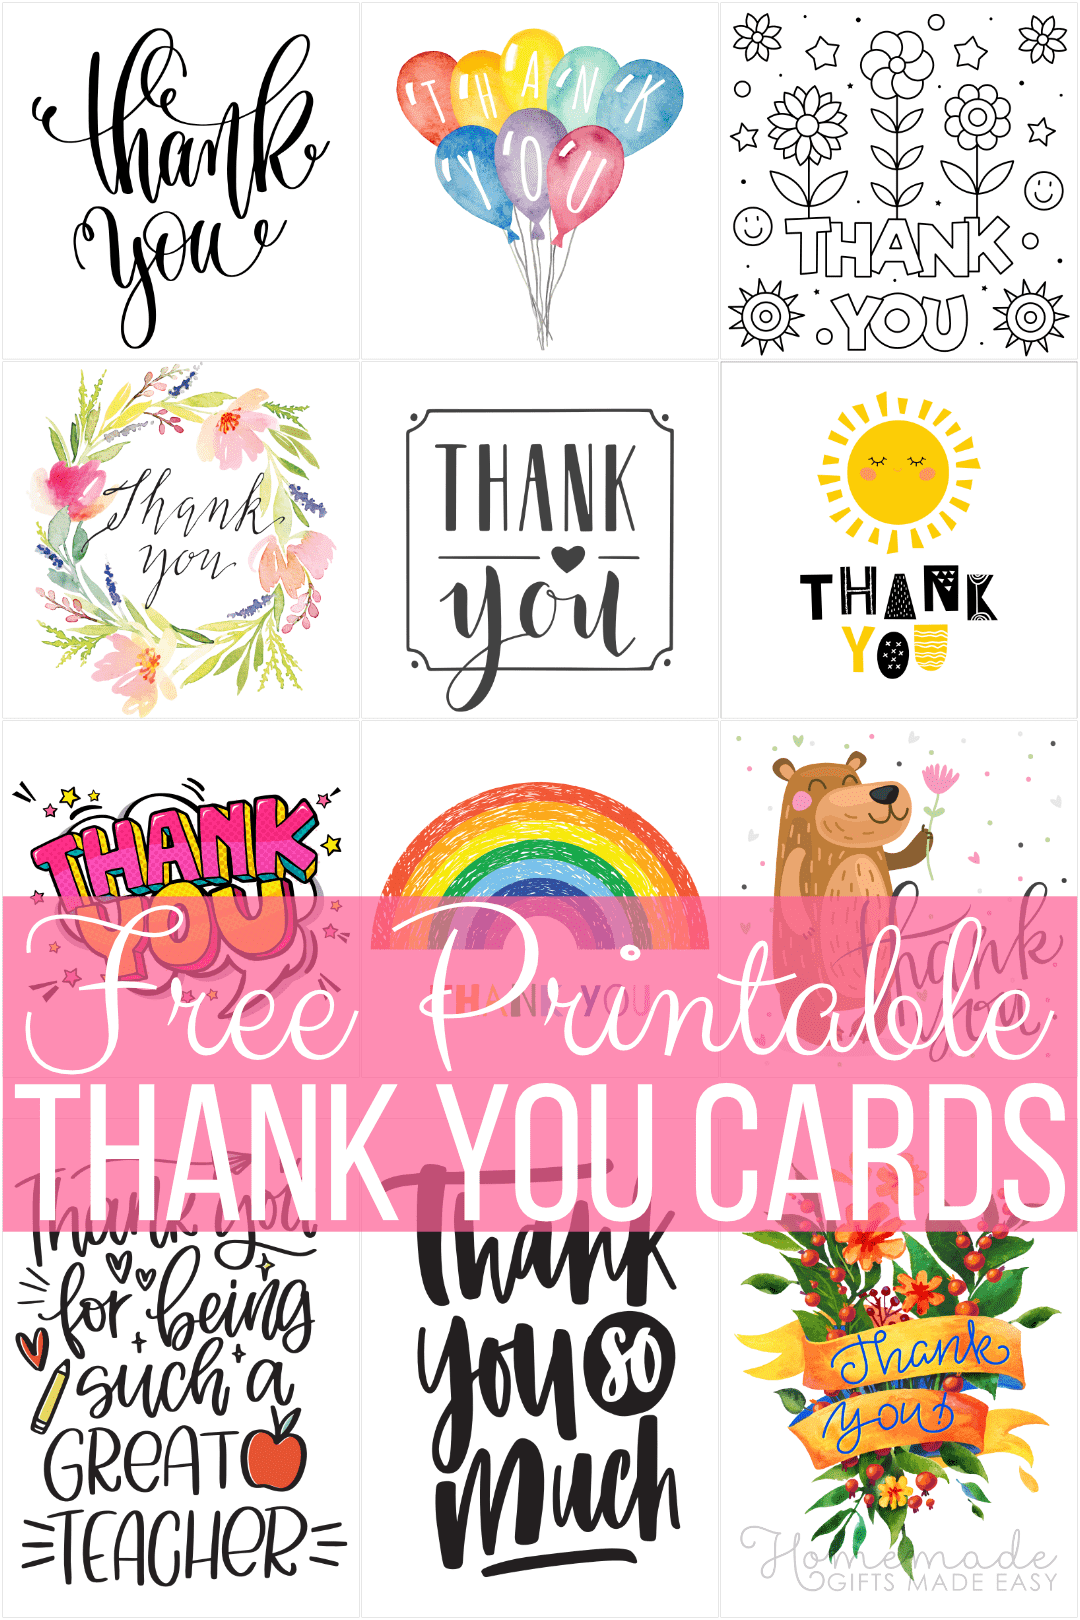 free-teacher-appreciation-cards-thank-you-cards-for-teachers-2023